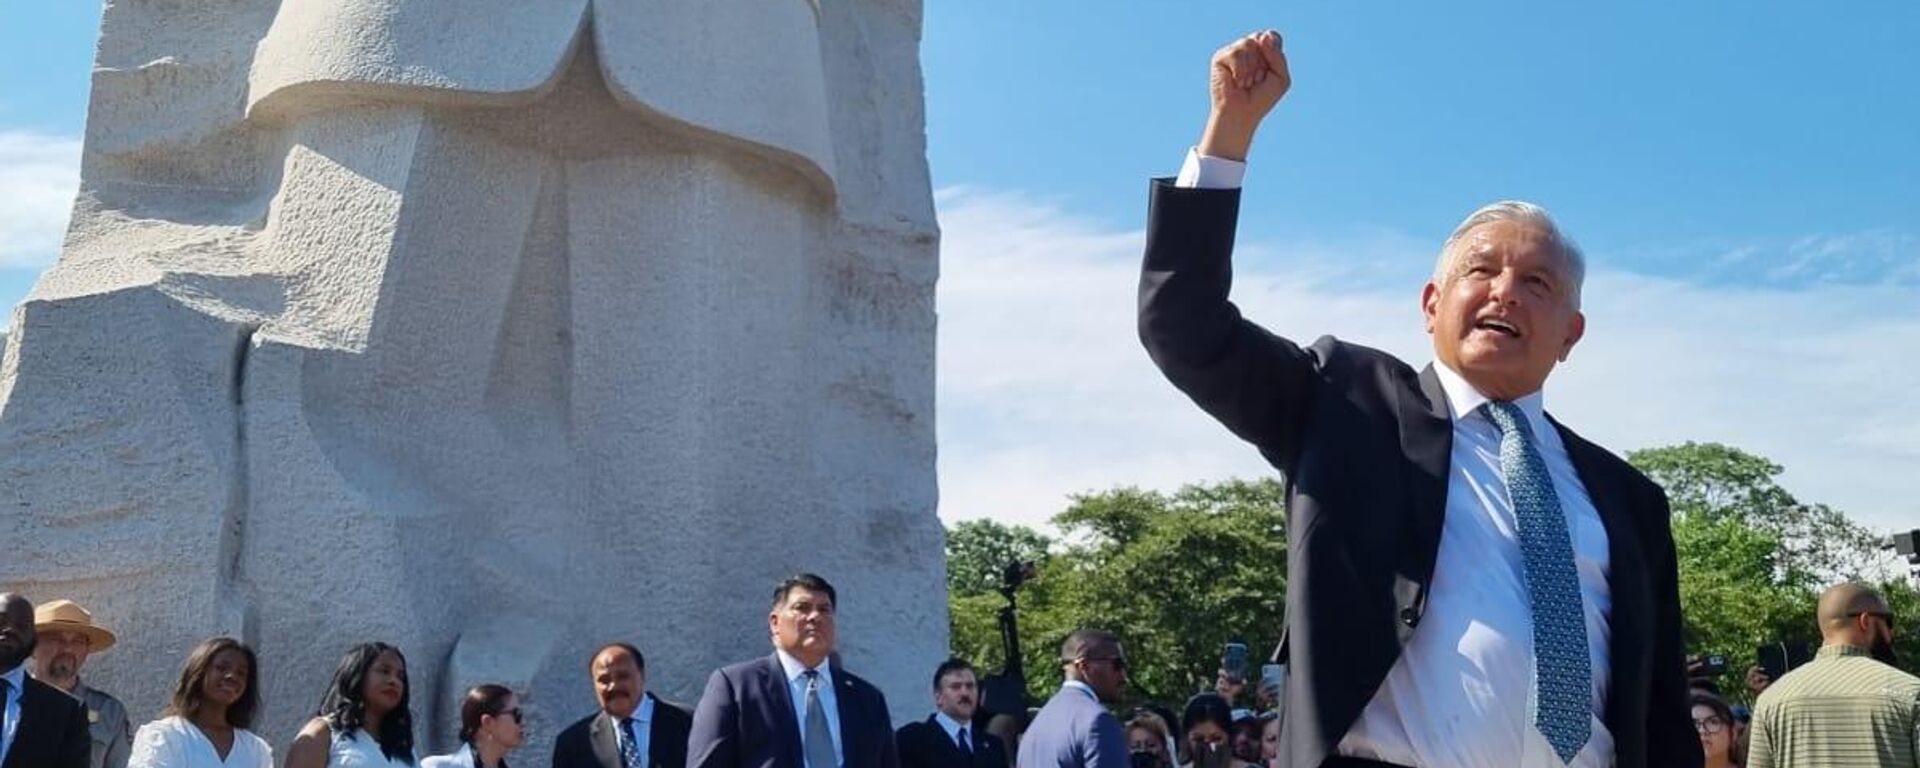 AMLO en el monumento a Martin Luther King - Sputnik Mundo, 1920, 13.07.2022